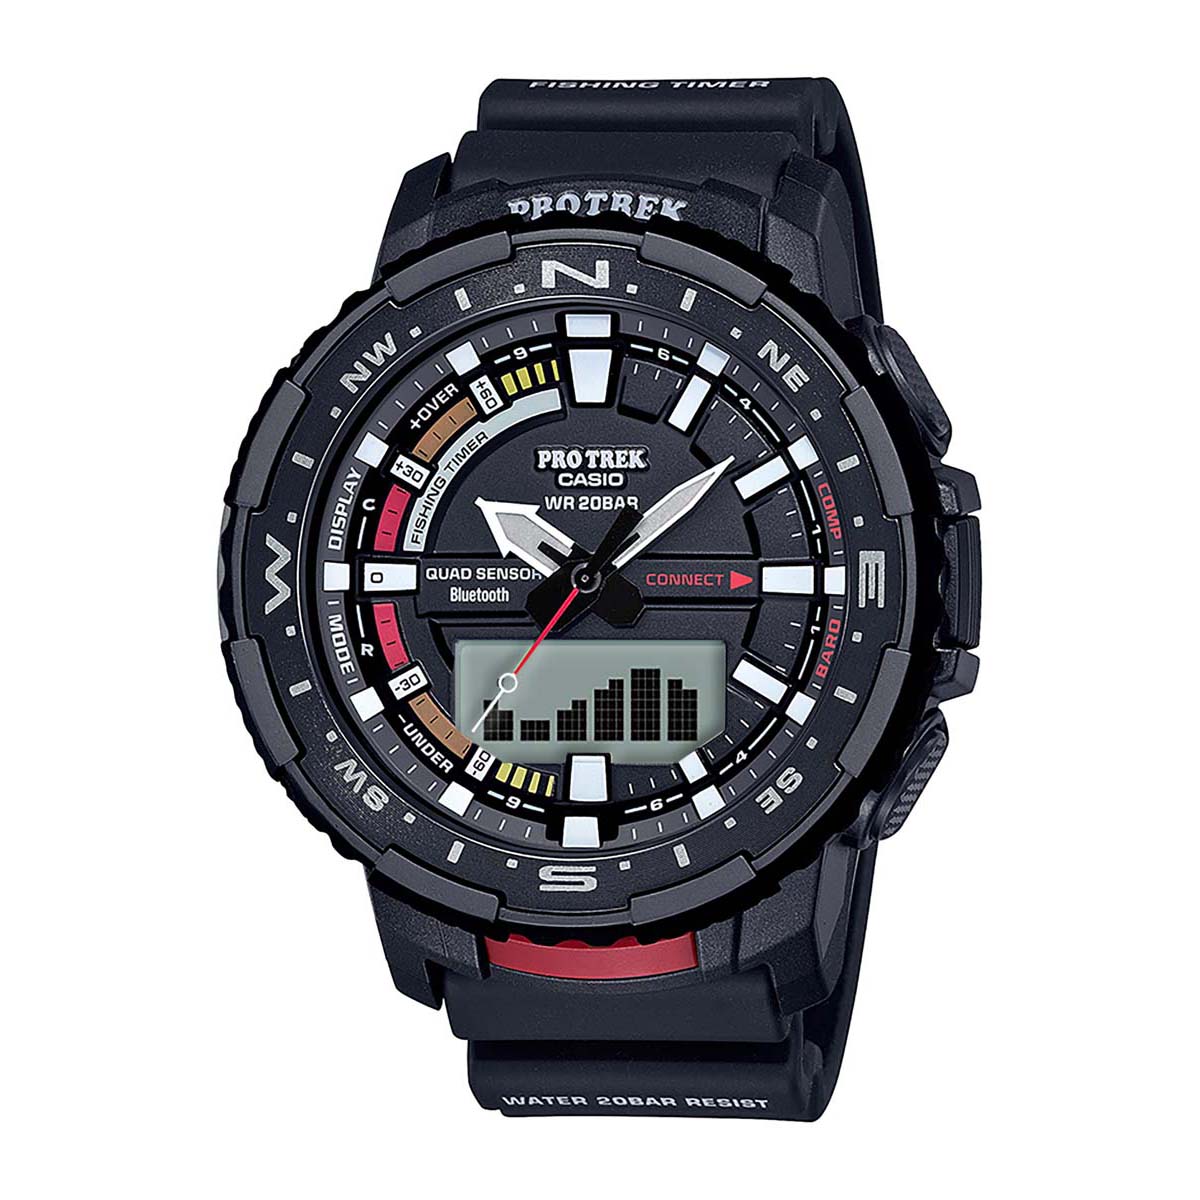 Casio Protrek PRT-B70 Marine Watch Black